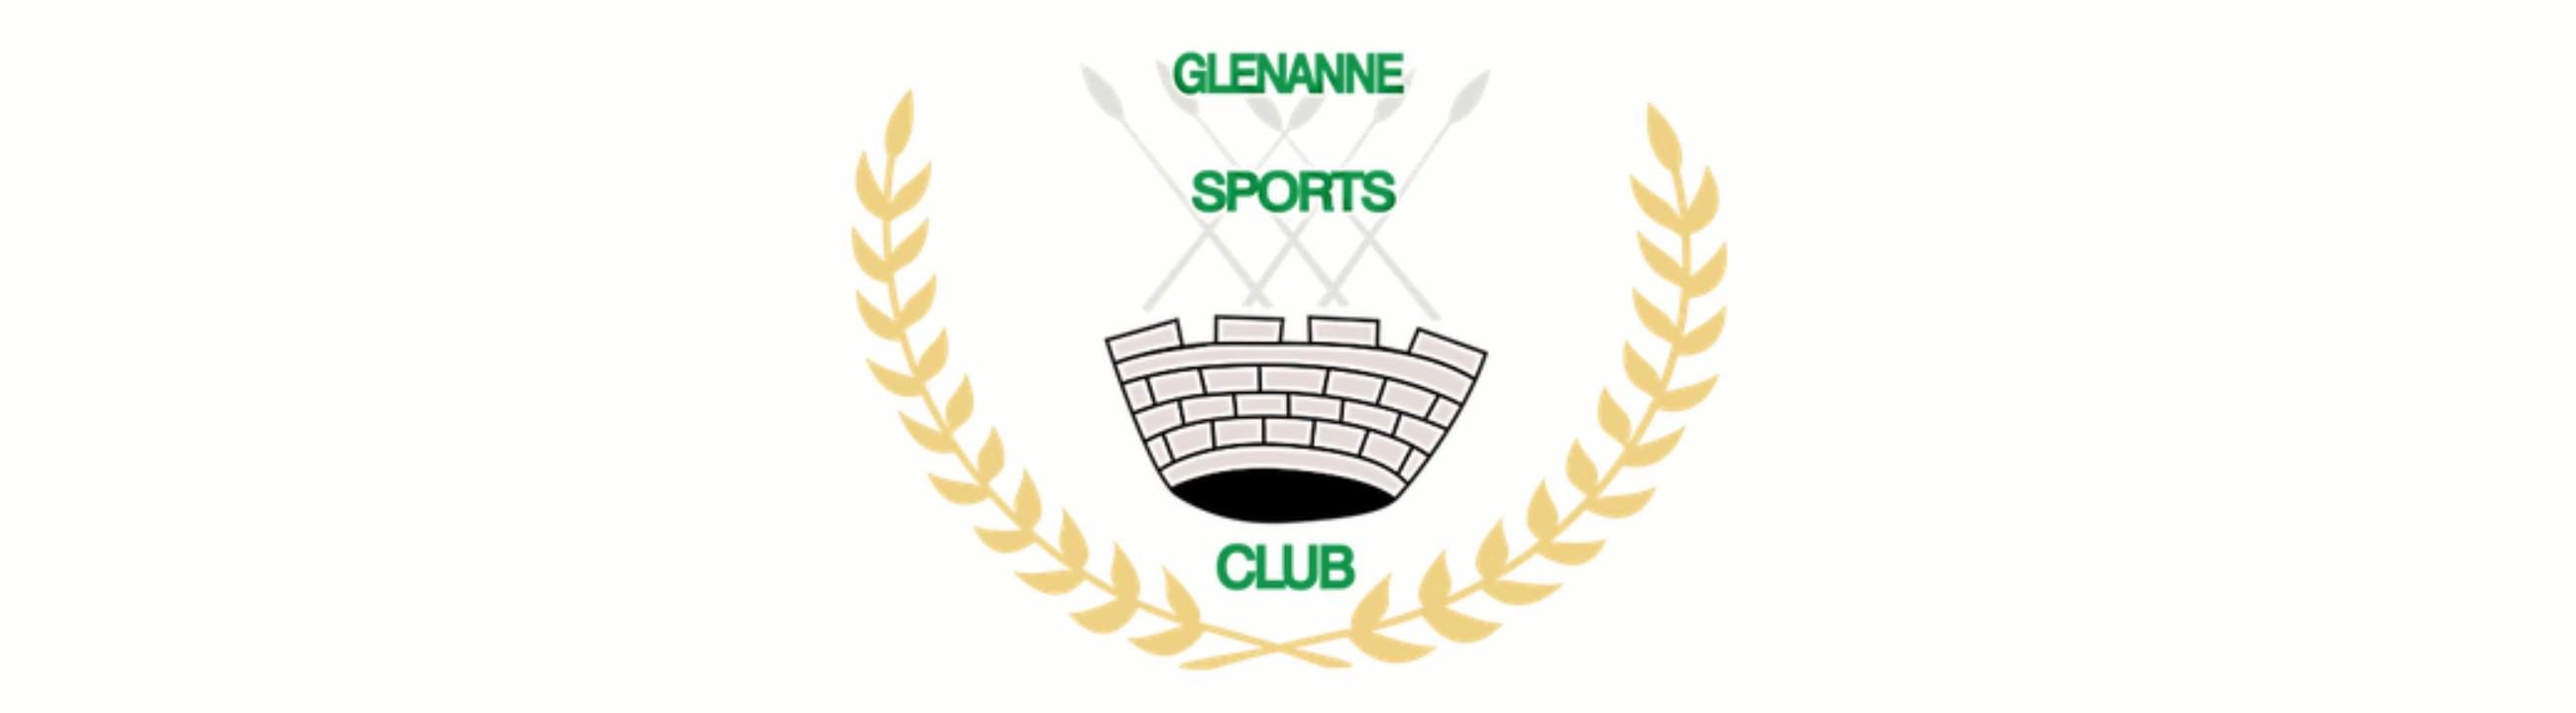 Glenanne Hockey Club